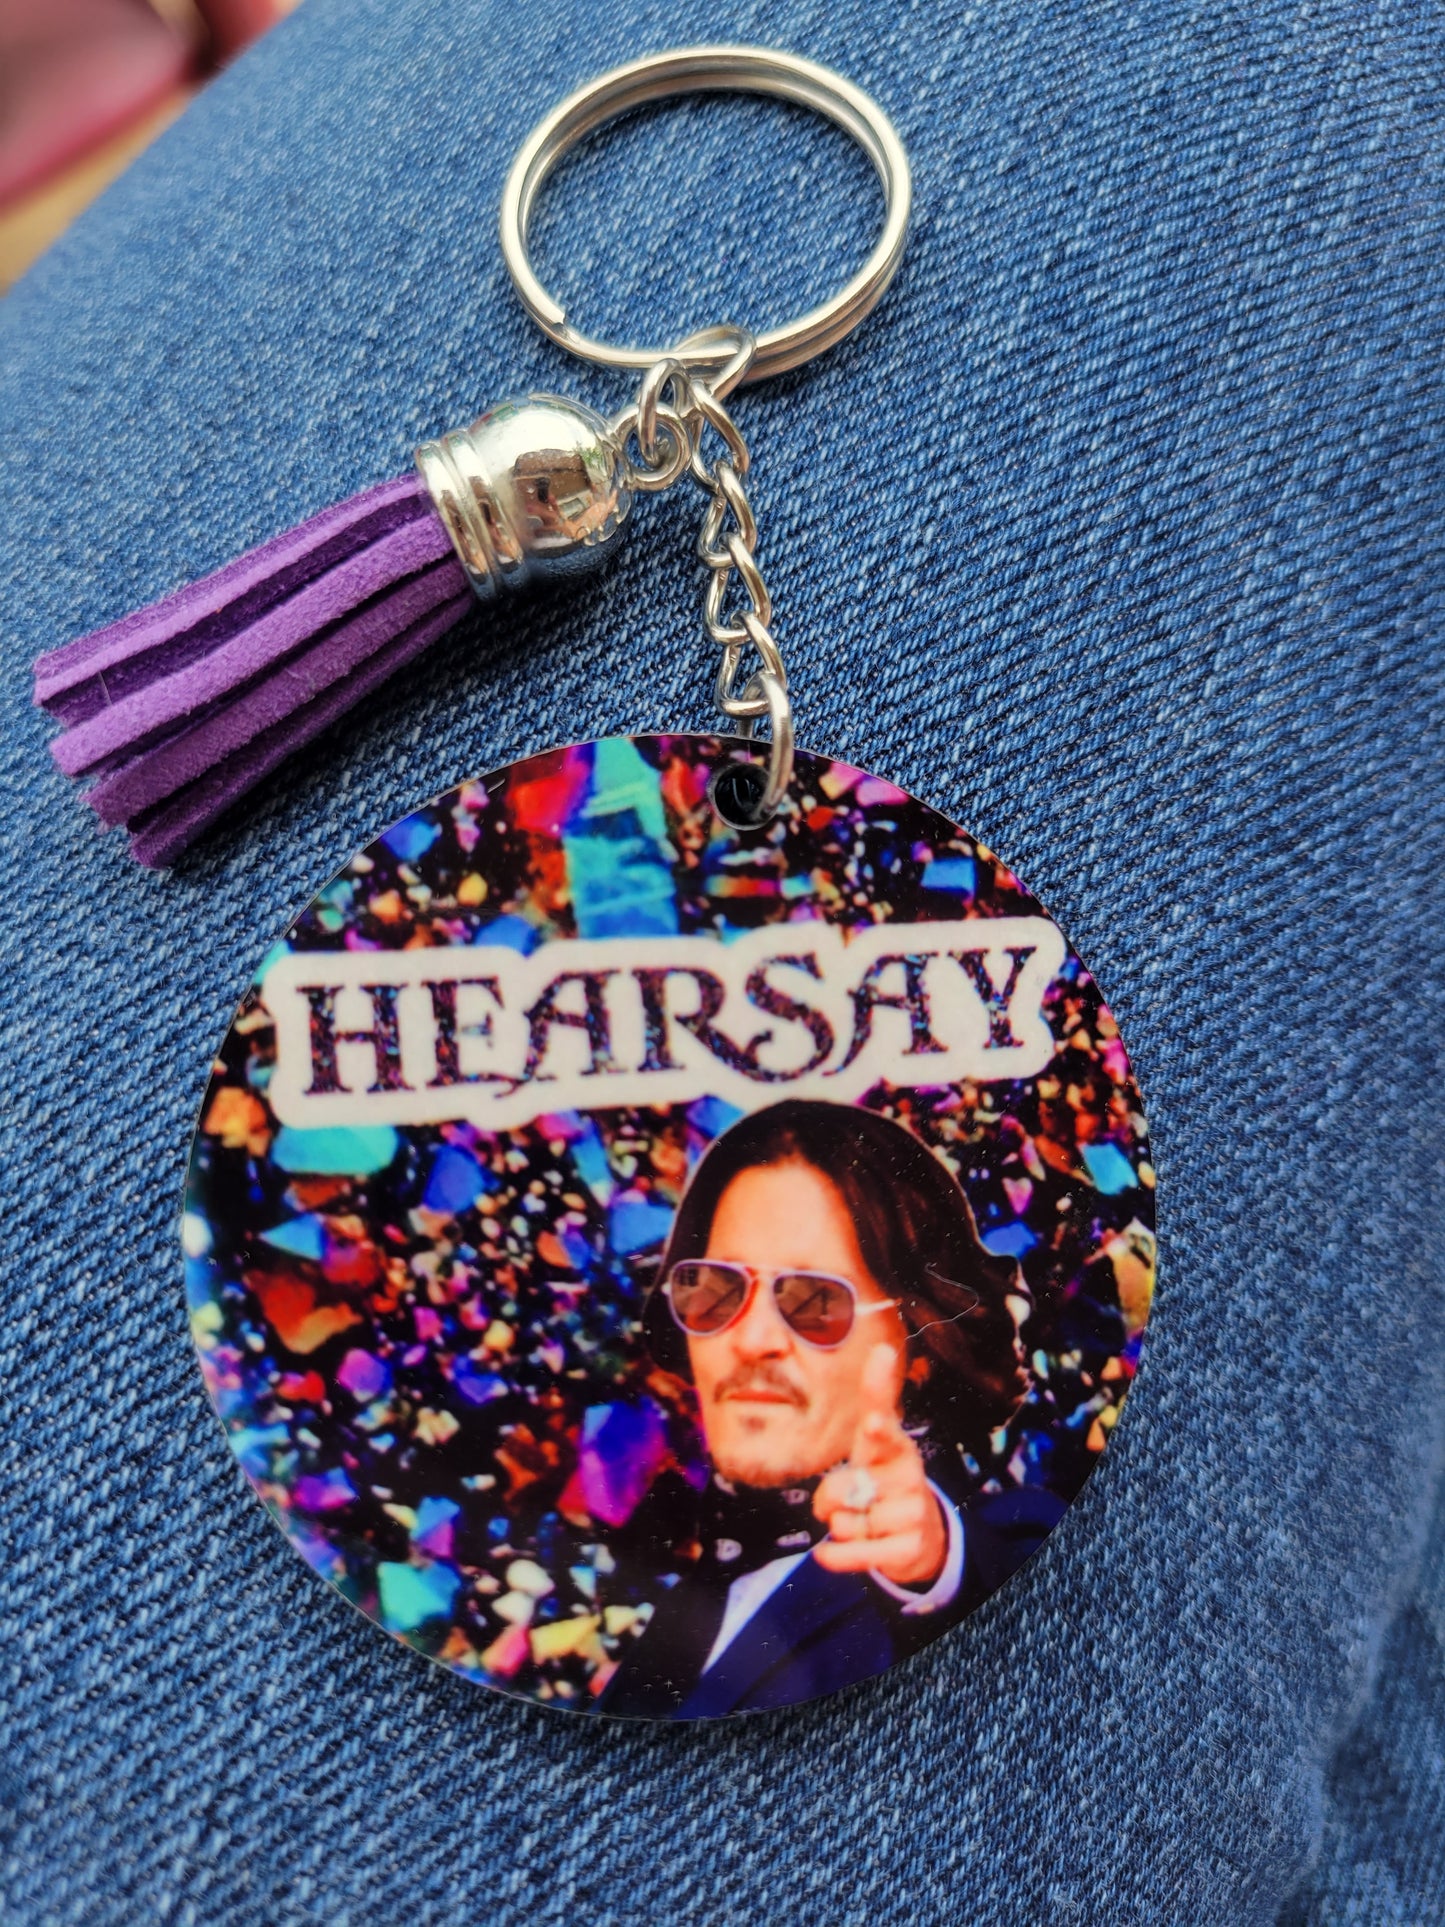 Hearsay keychain